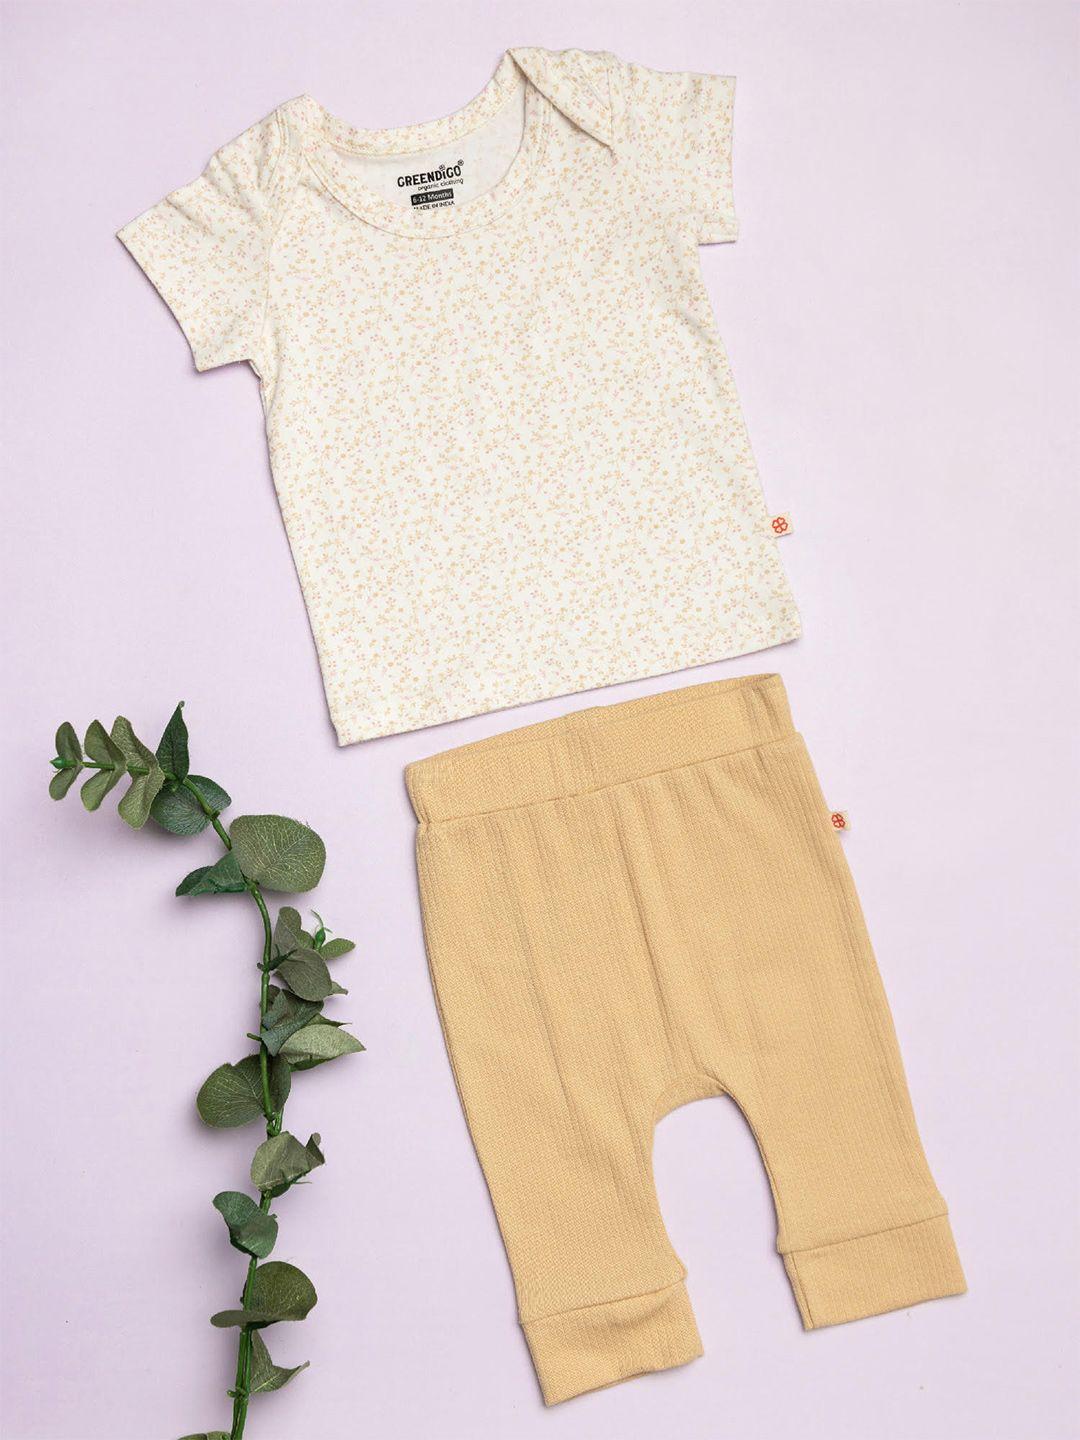 greendigo unisex kids cream and white printed organic cotton t shirt with leggings